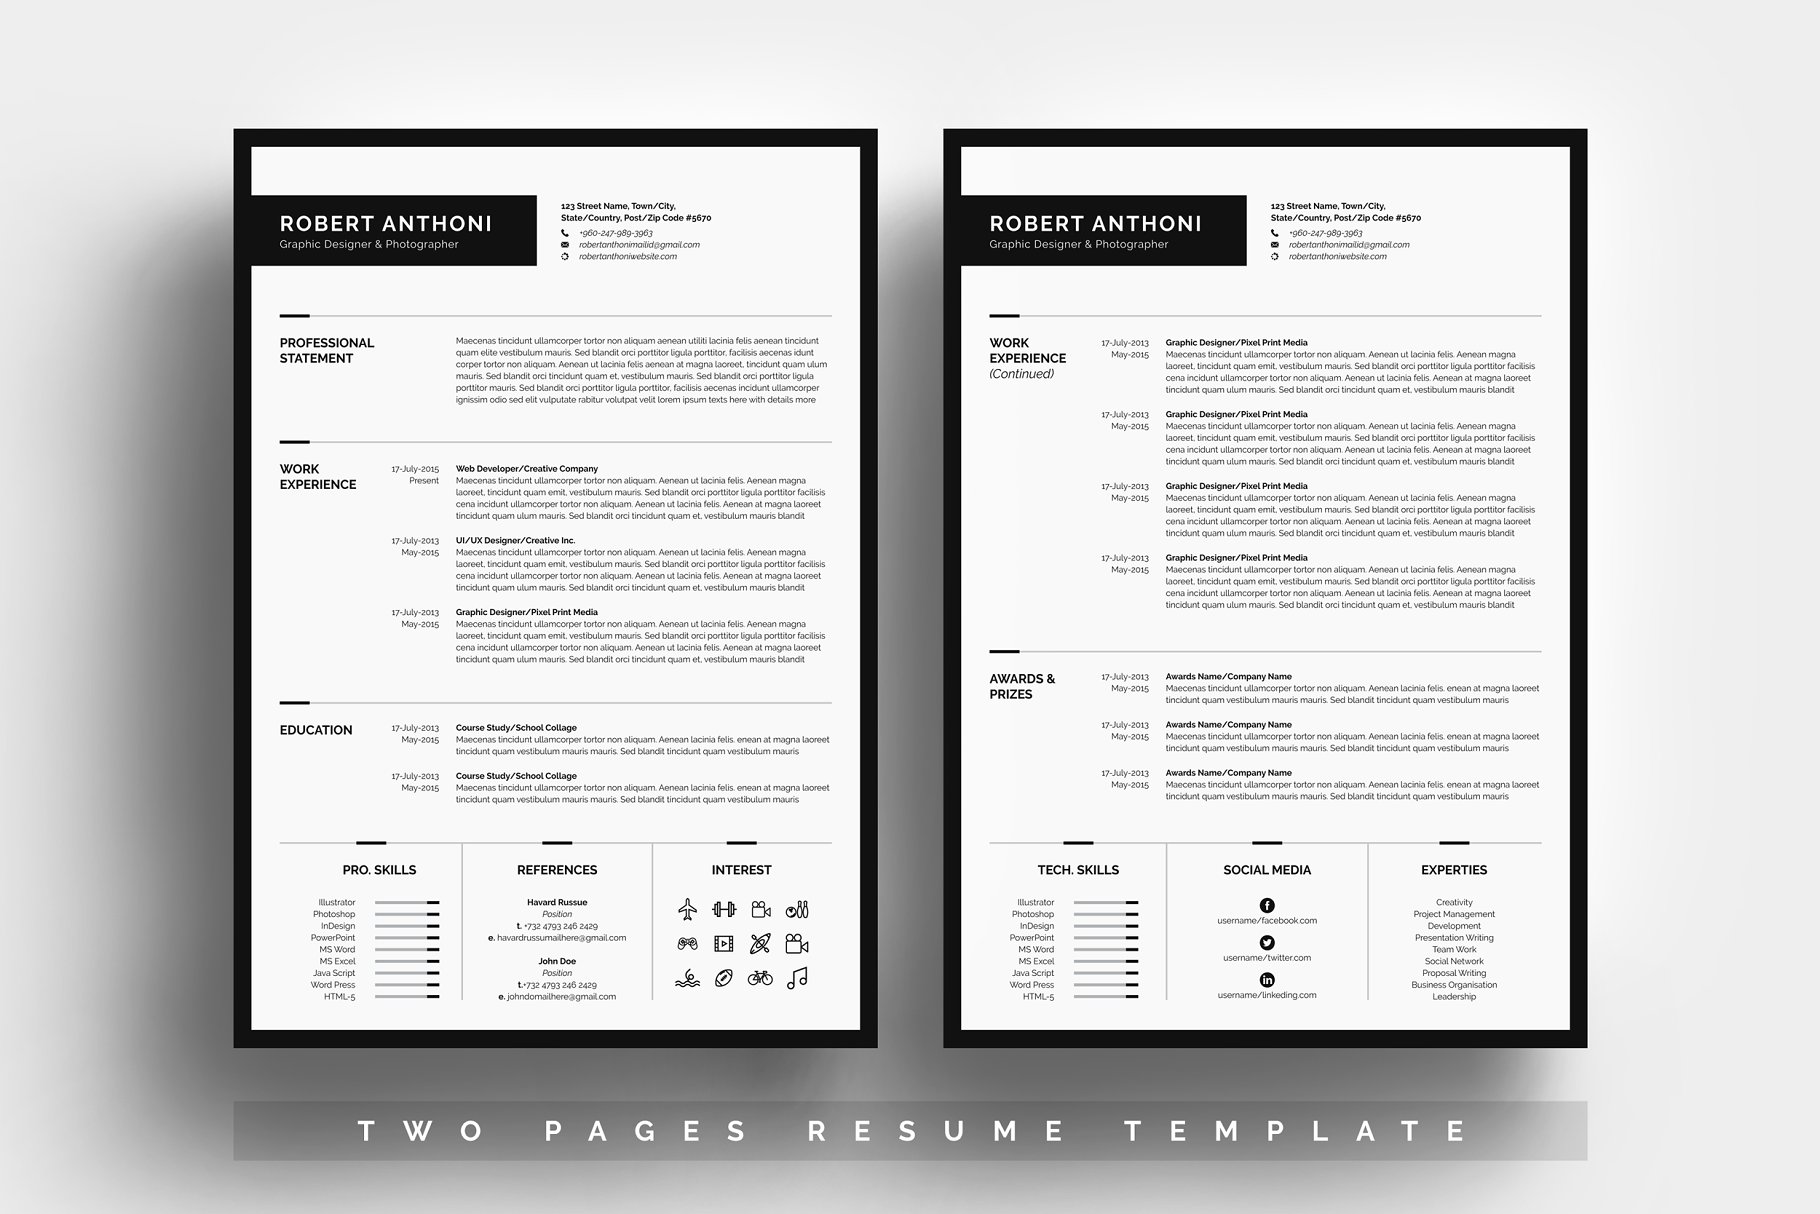 简约风格电子简历模板[4页] Clean Resume Template 4 Pages插图(1)